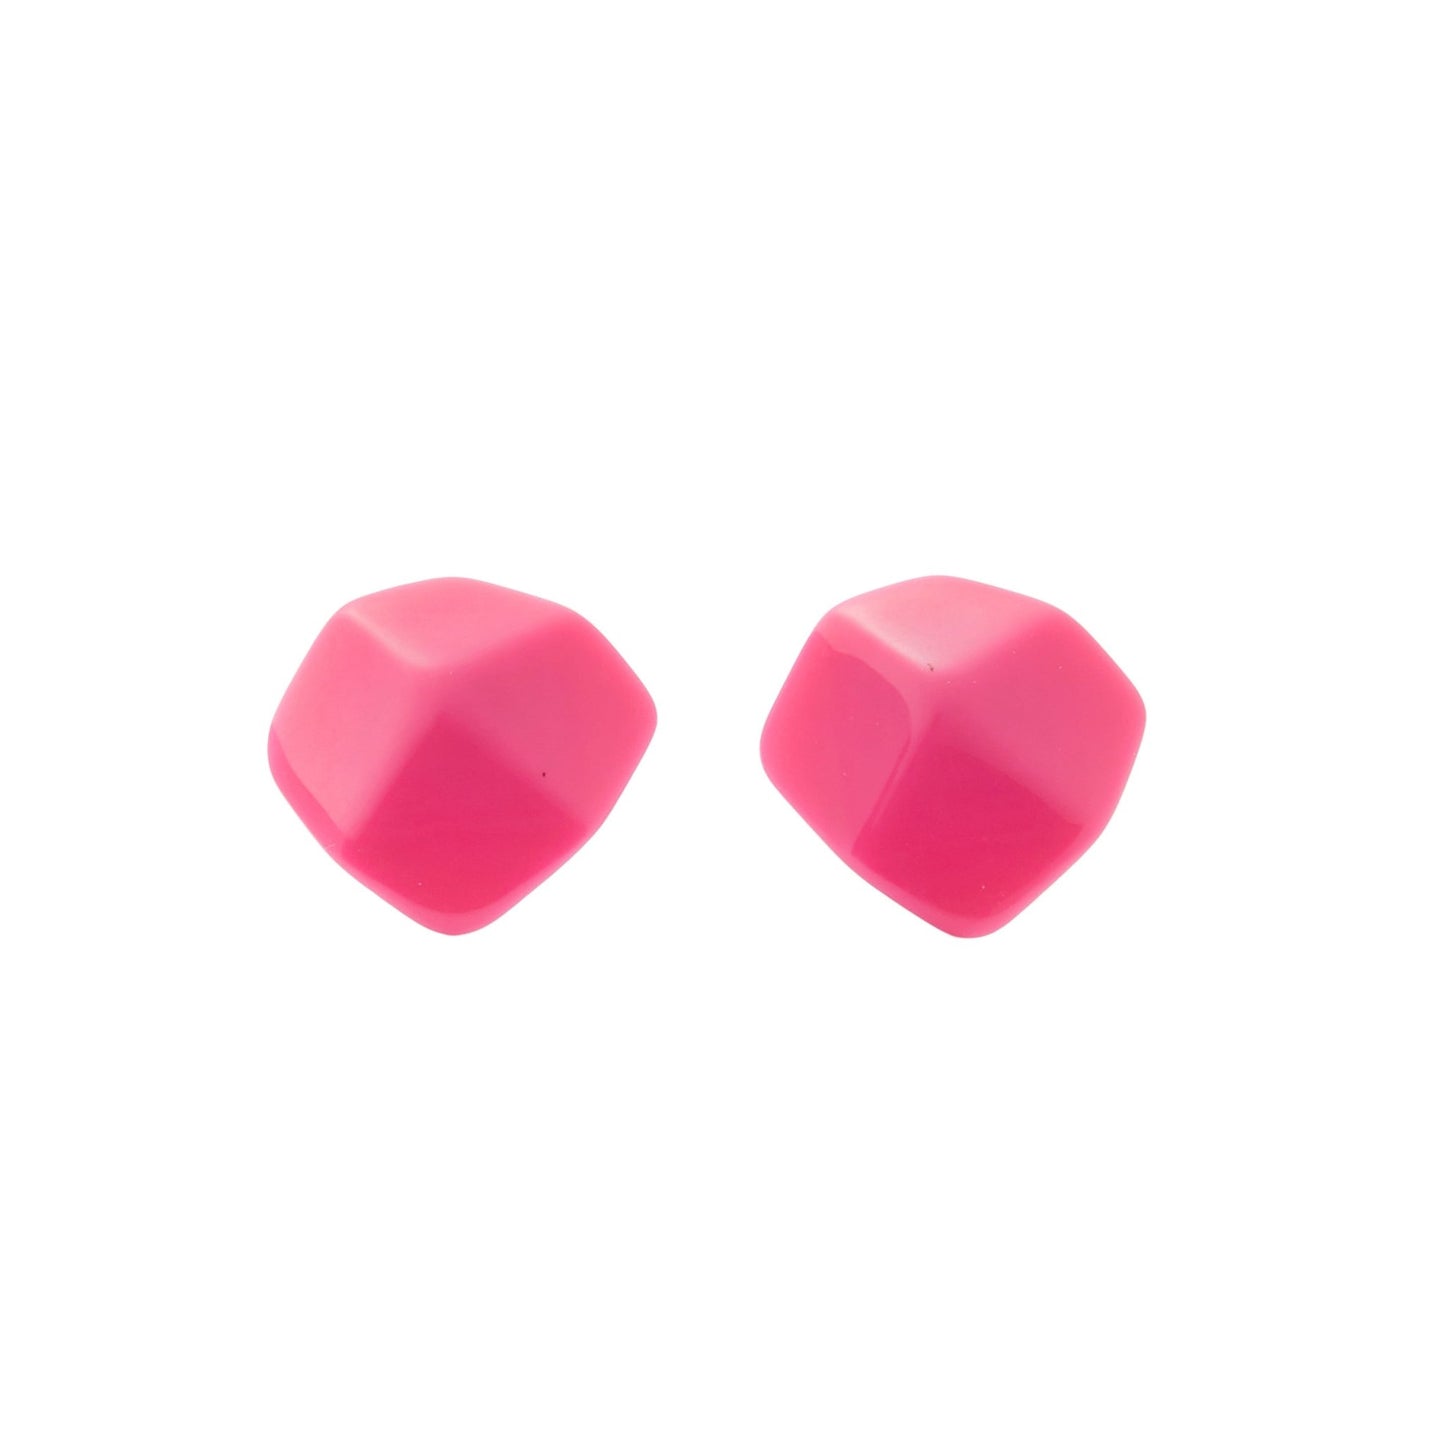 Mini Sculpture Stud Earrings in Neon Pink